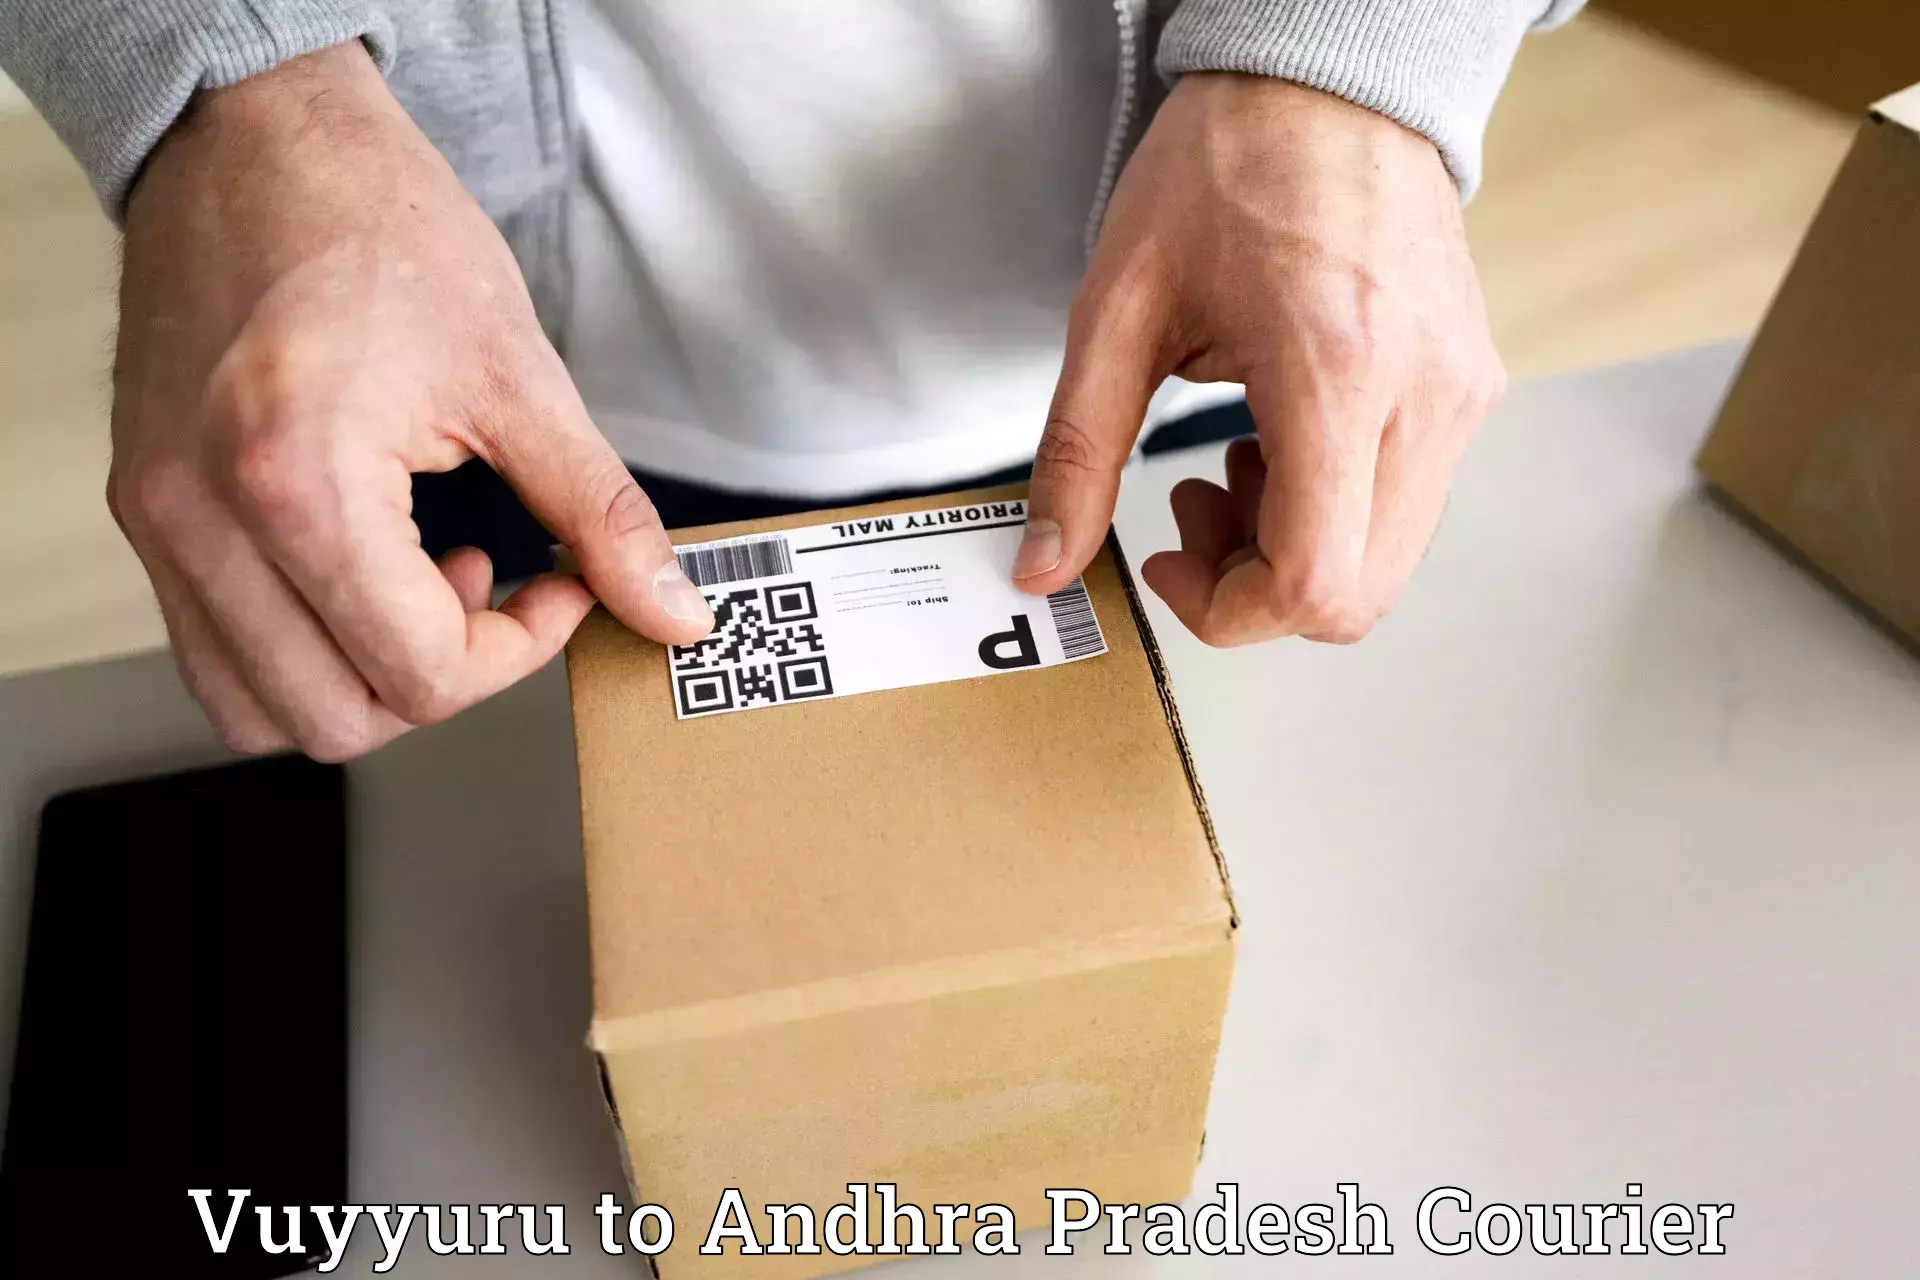 Affordable parcel service Vuyyuru to Vempalli